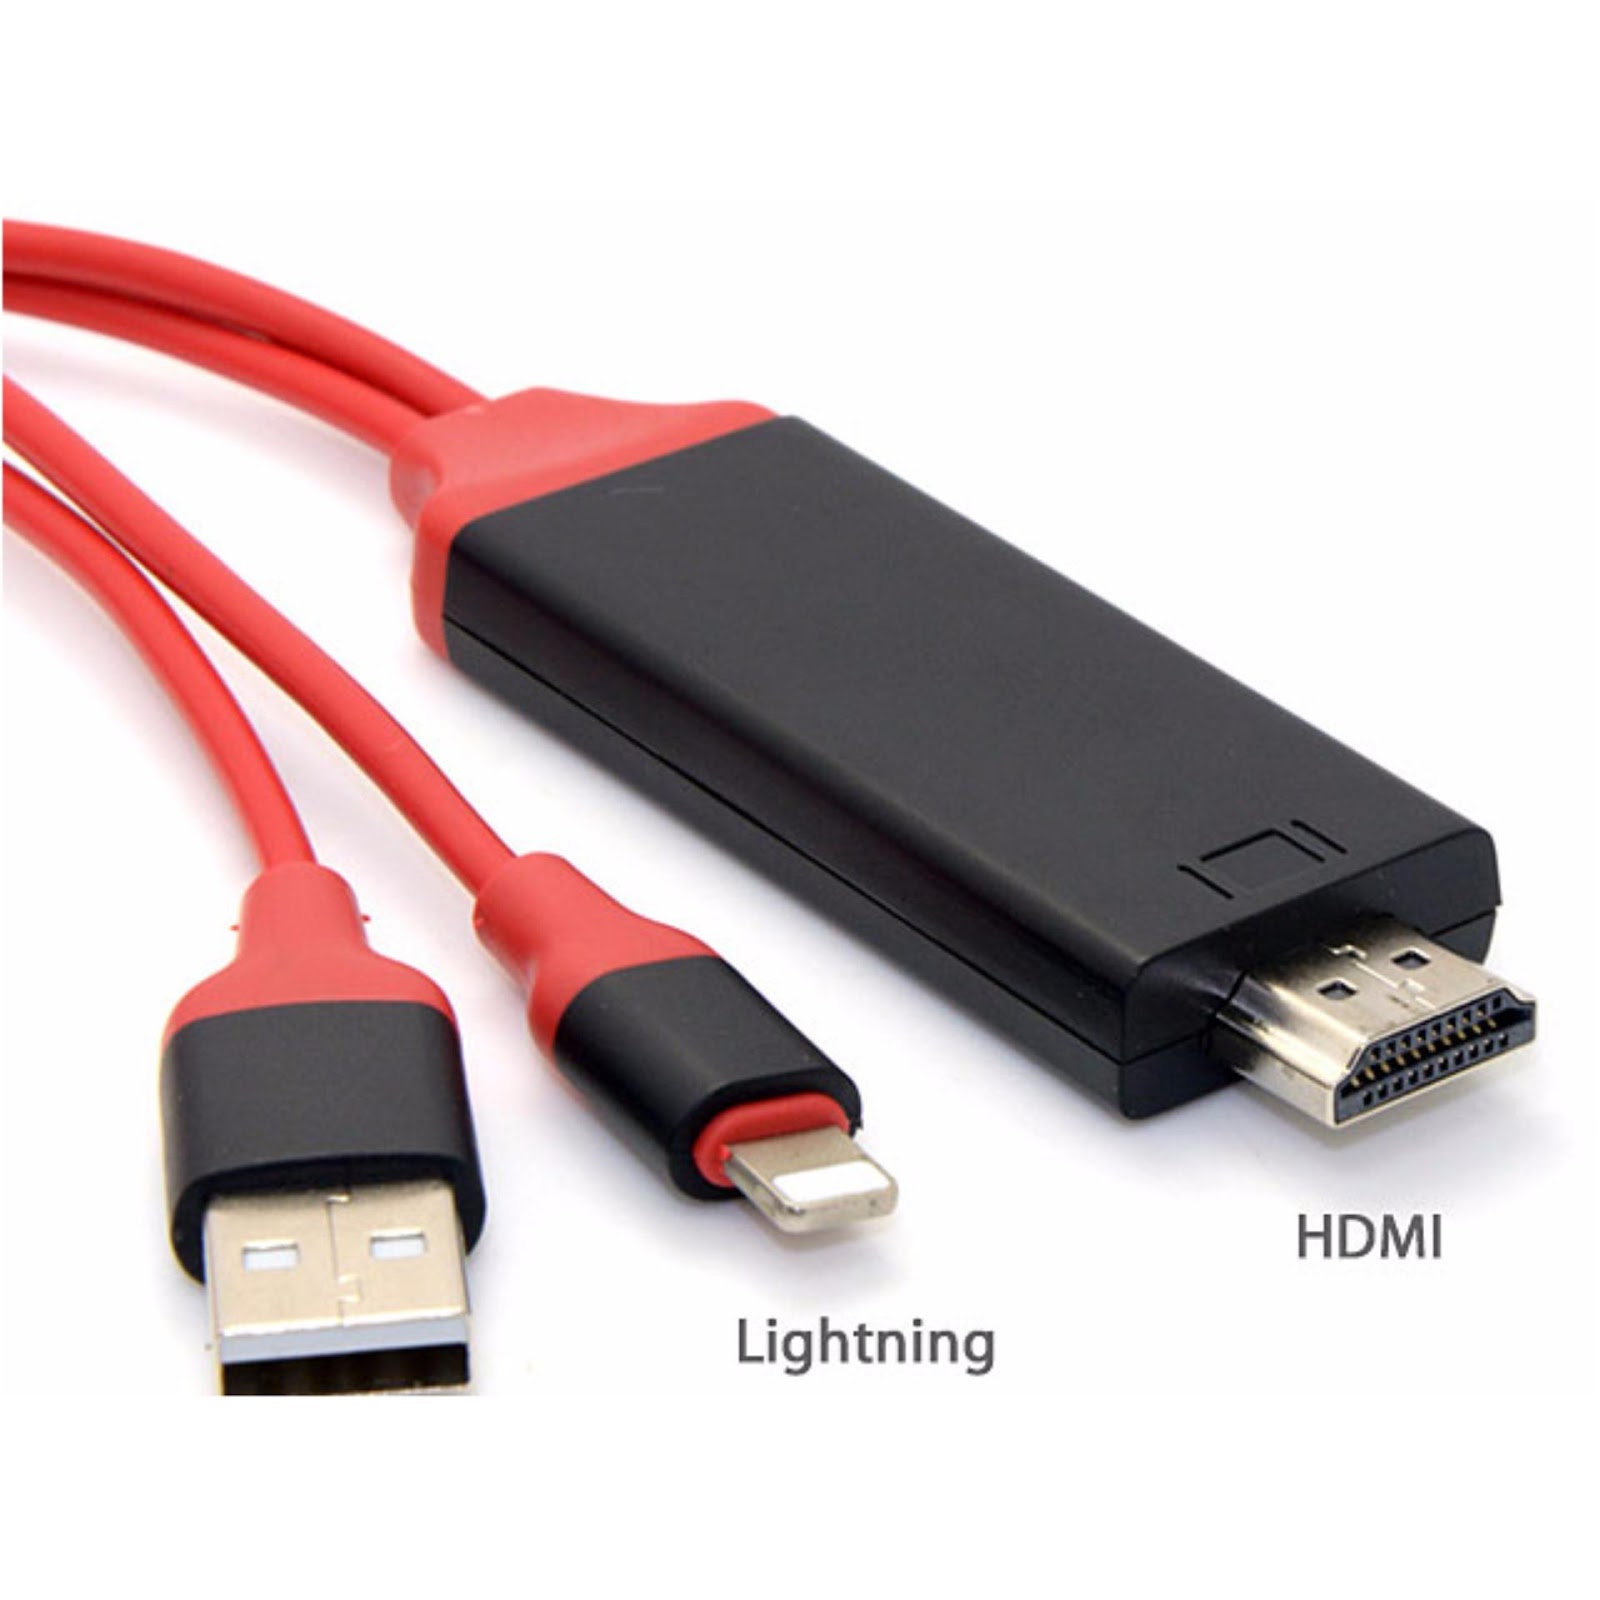 Alt: Kết nối điện thoại iPhone với tivi Samsung qua dây cáp HDMI 